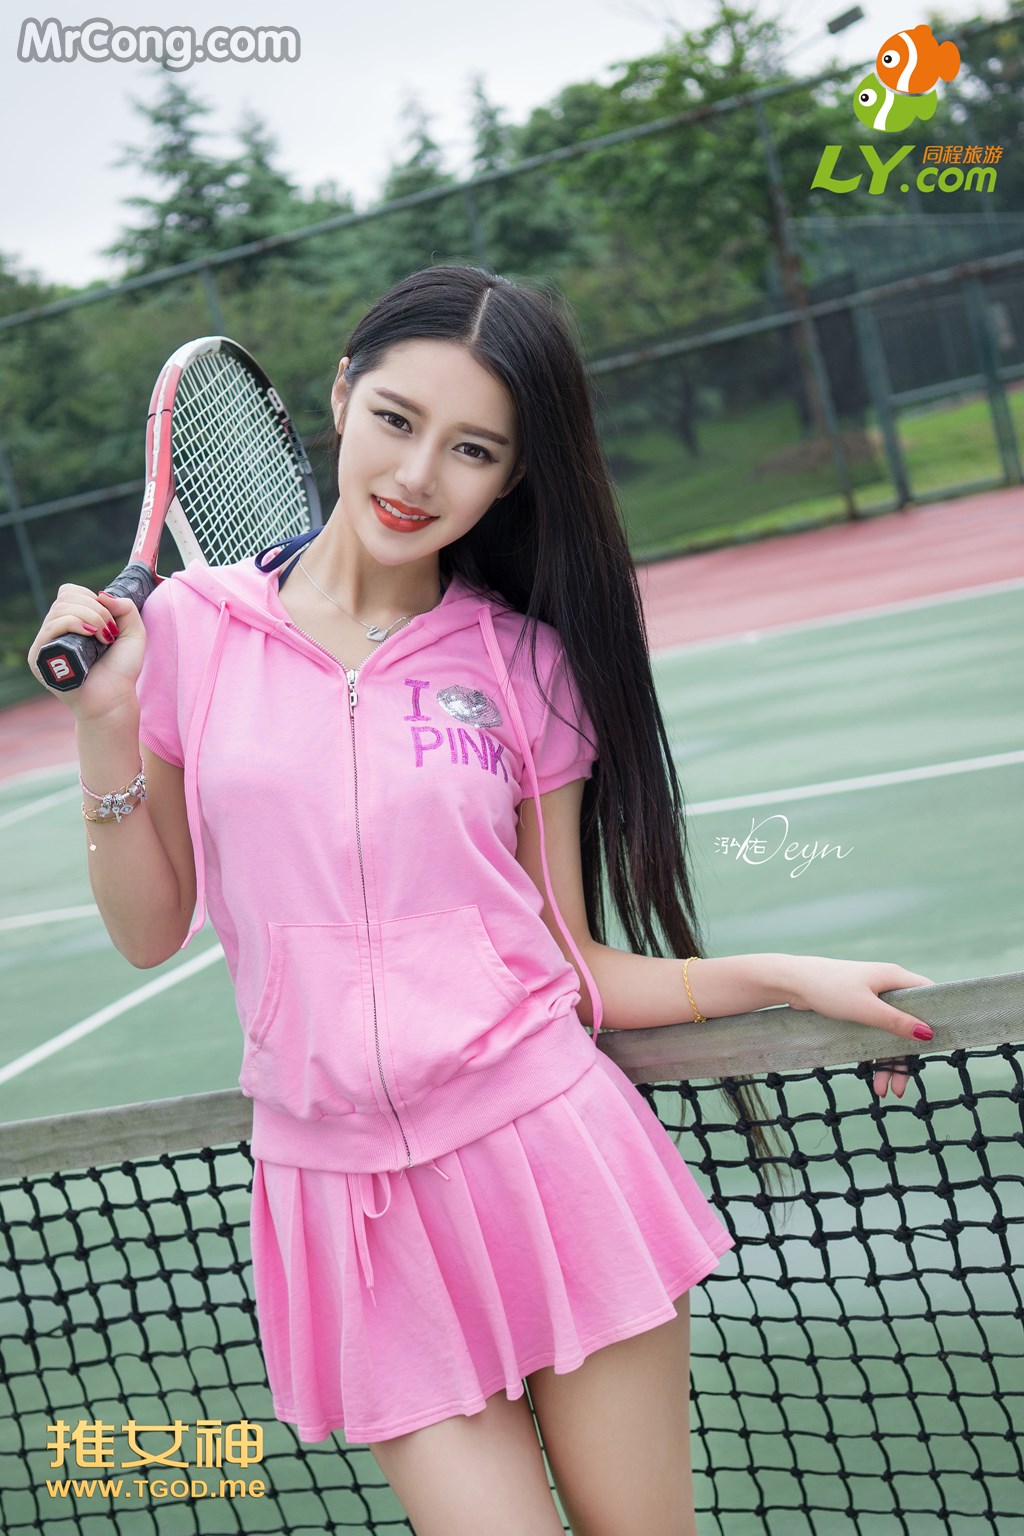 TGOD 2014-09-24: Model Xu Yan Xin (徐妍馨) (66 pictures) photo 1-4